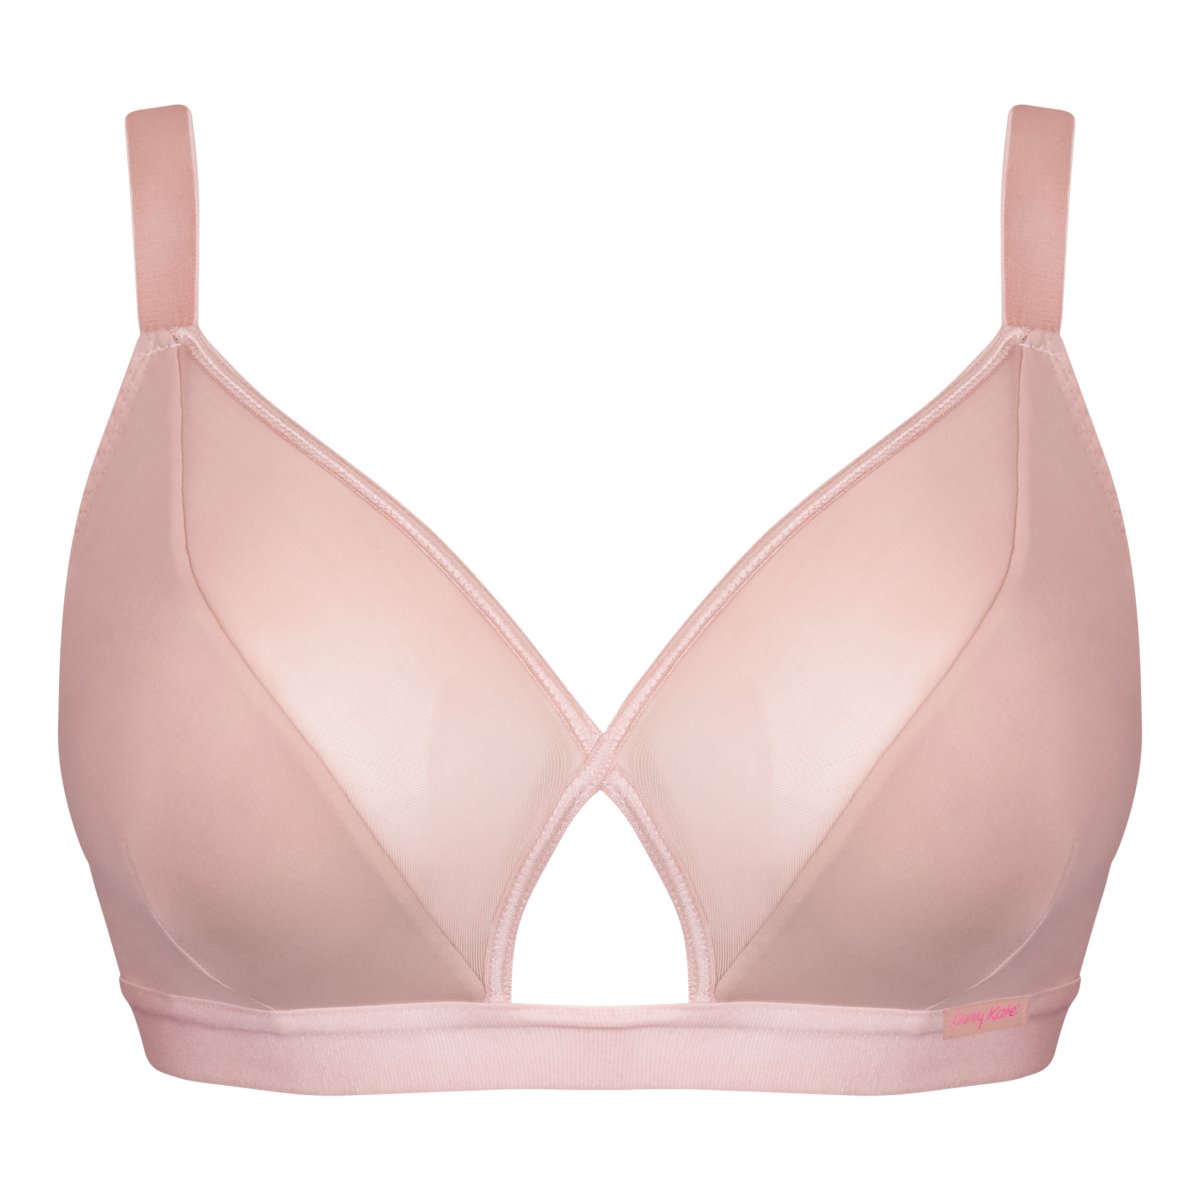 Get Up and Chill Bralette Soft Pink - CK040110 – Bravo Bra Boutique